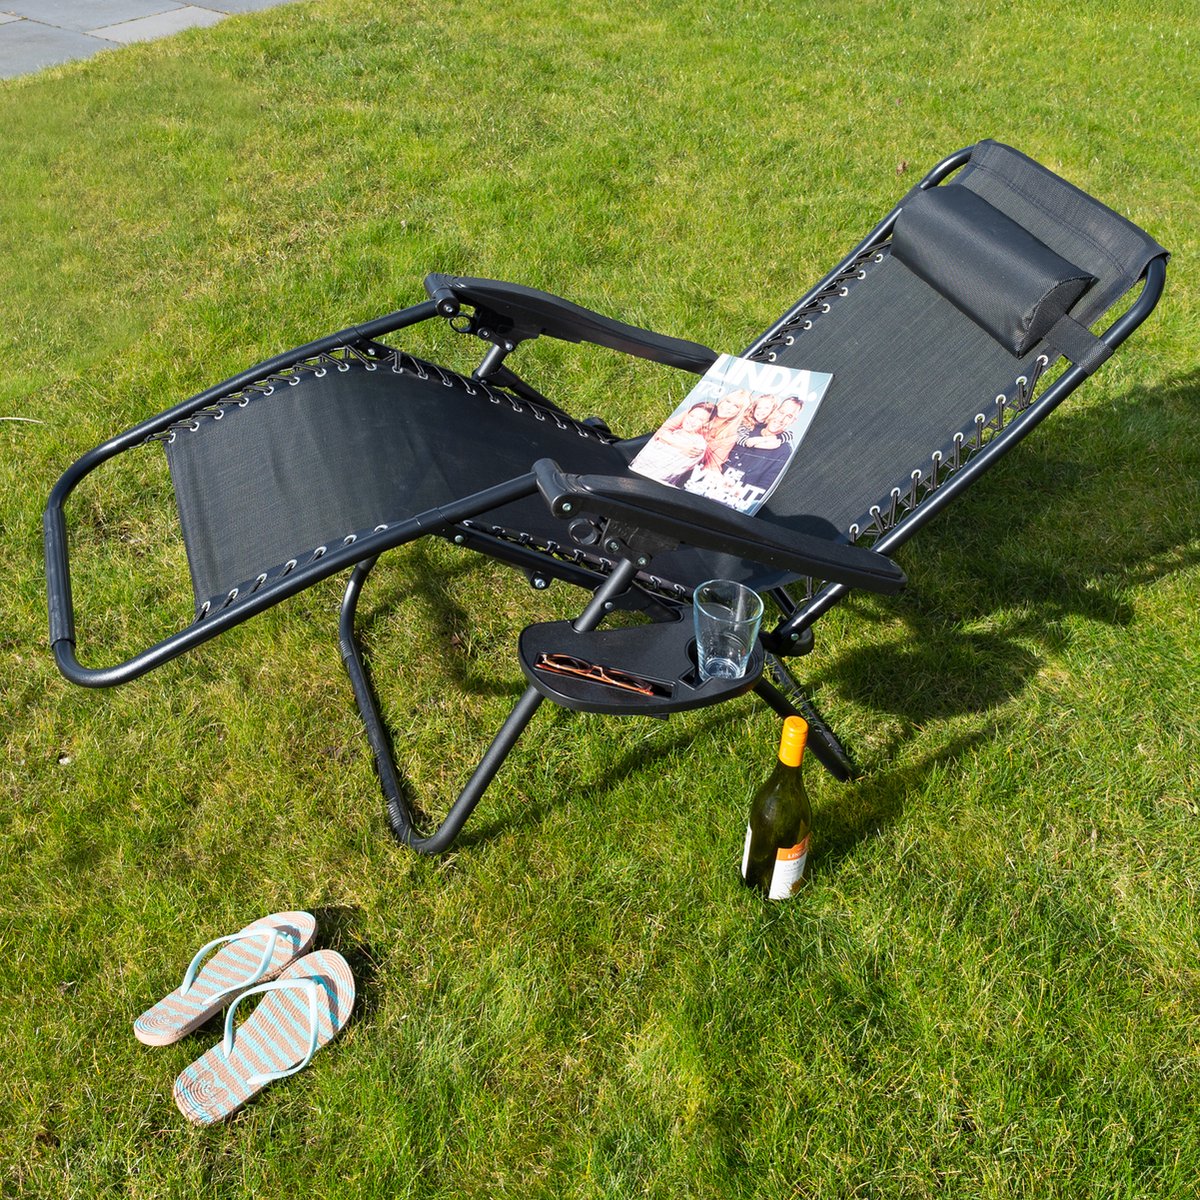 Eleganca Foldable Garden Chair Lounger Black